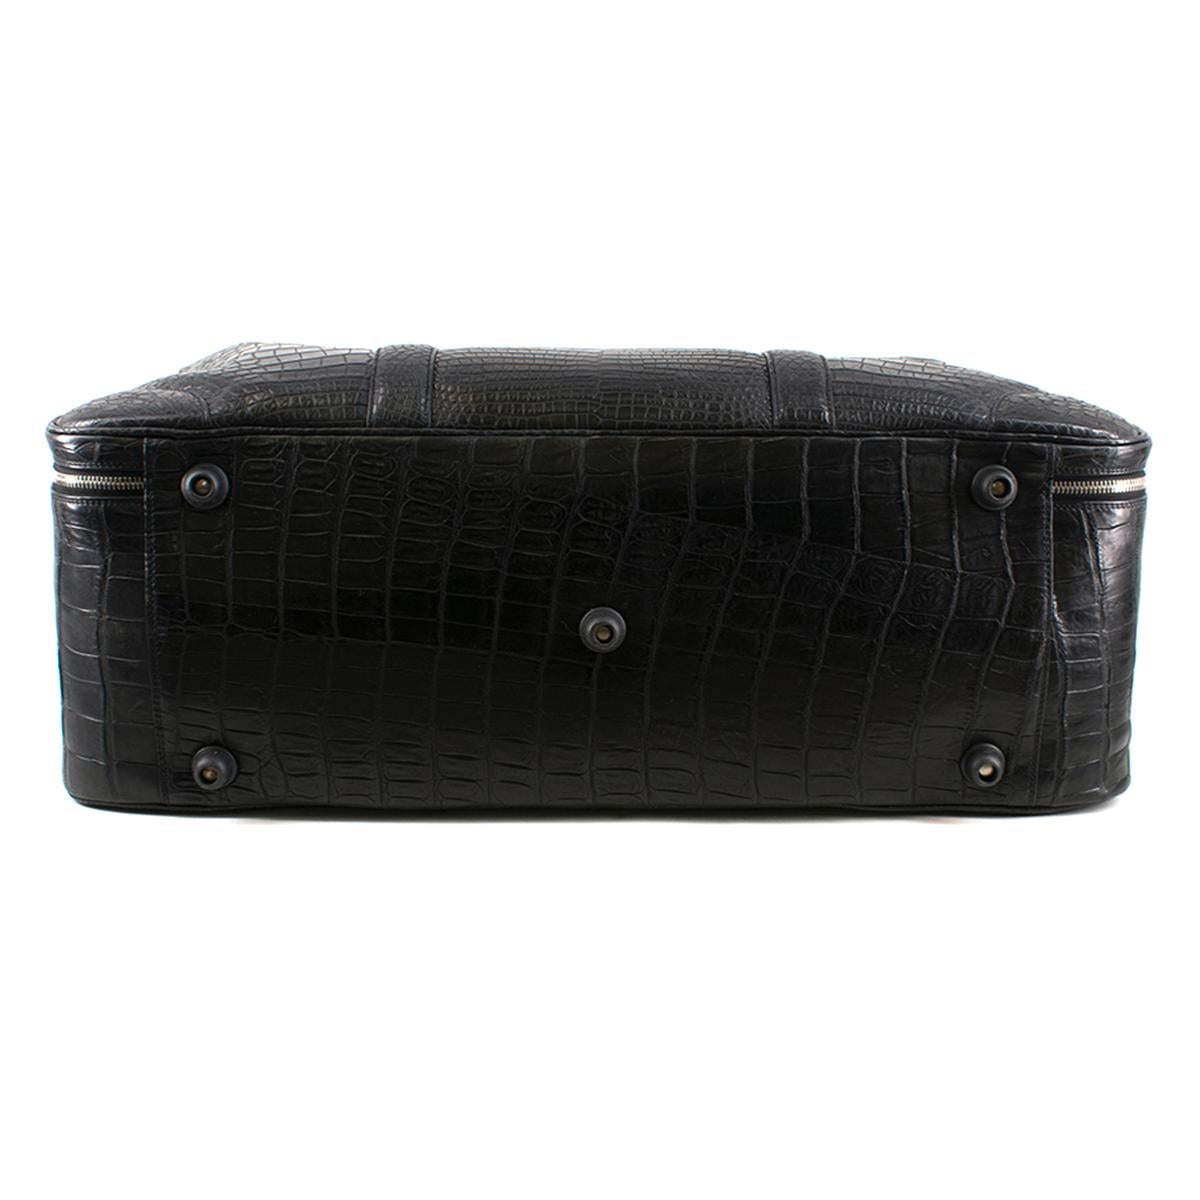 Women's Bespoke large black matte crocodile leather suitcase